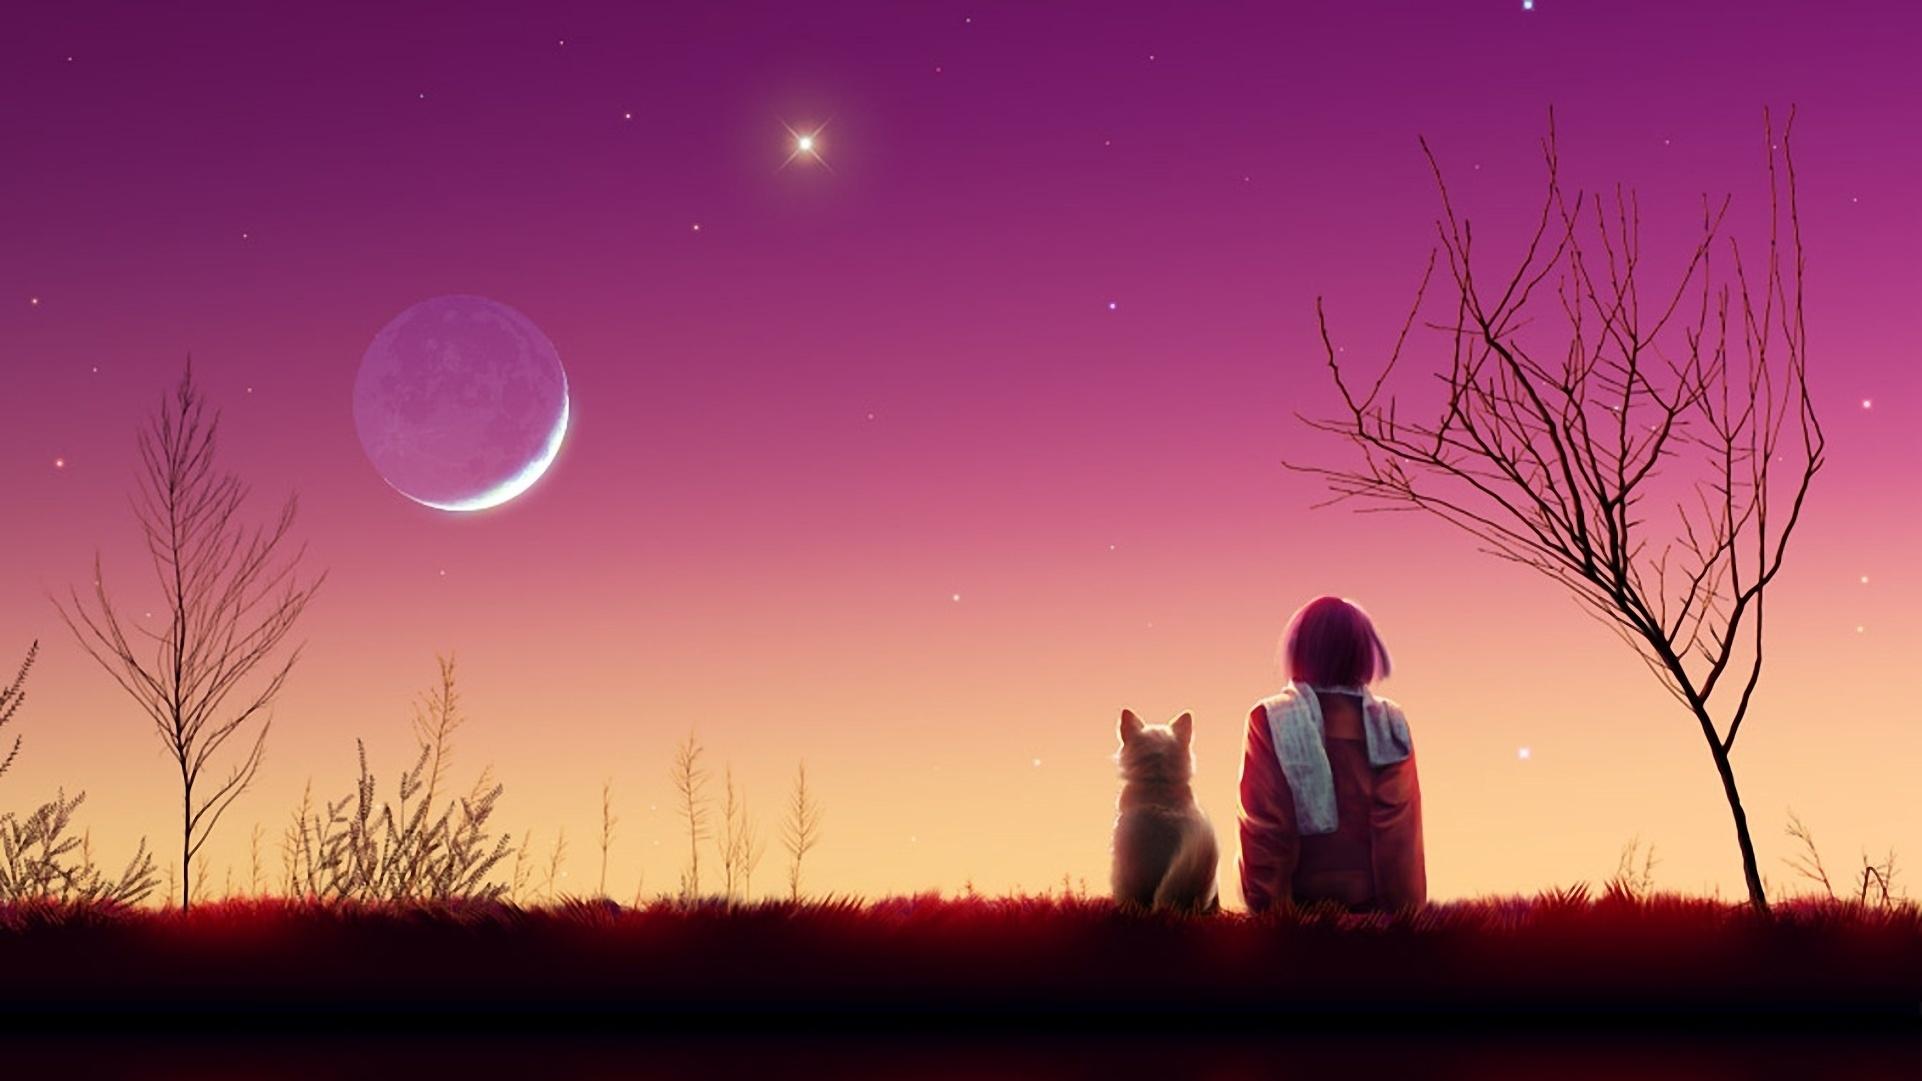 Kagaya Moon Anime Girl Cat Sunset Nature , Image